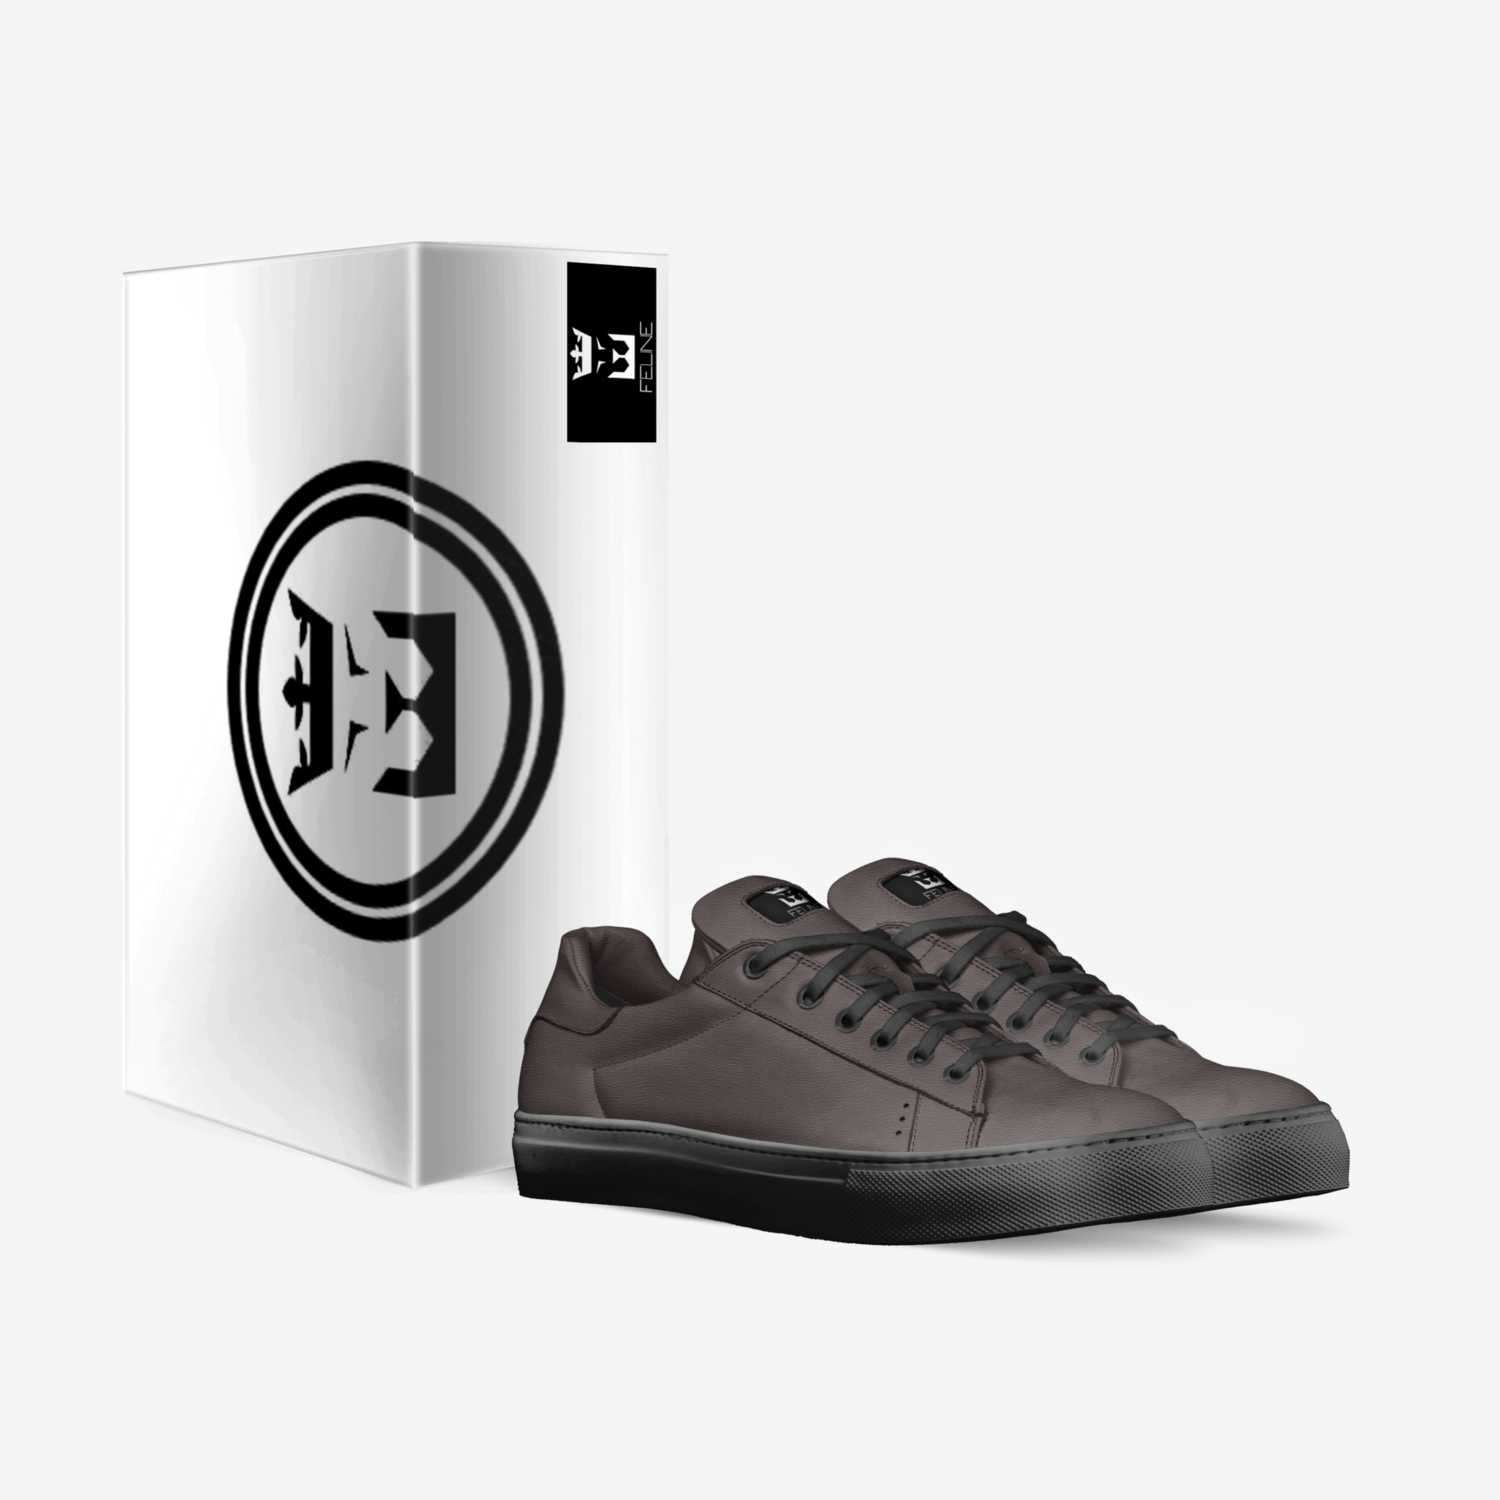 FELINE custom made in Italy shoes by Renato Bernardo | Box view